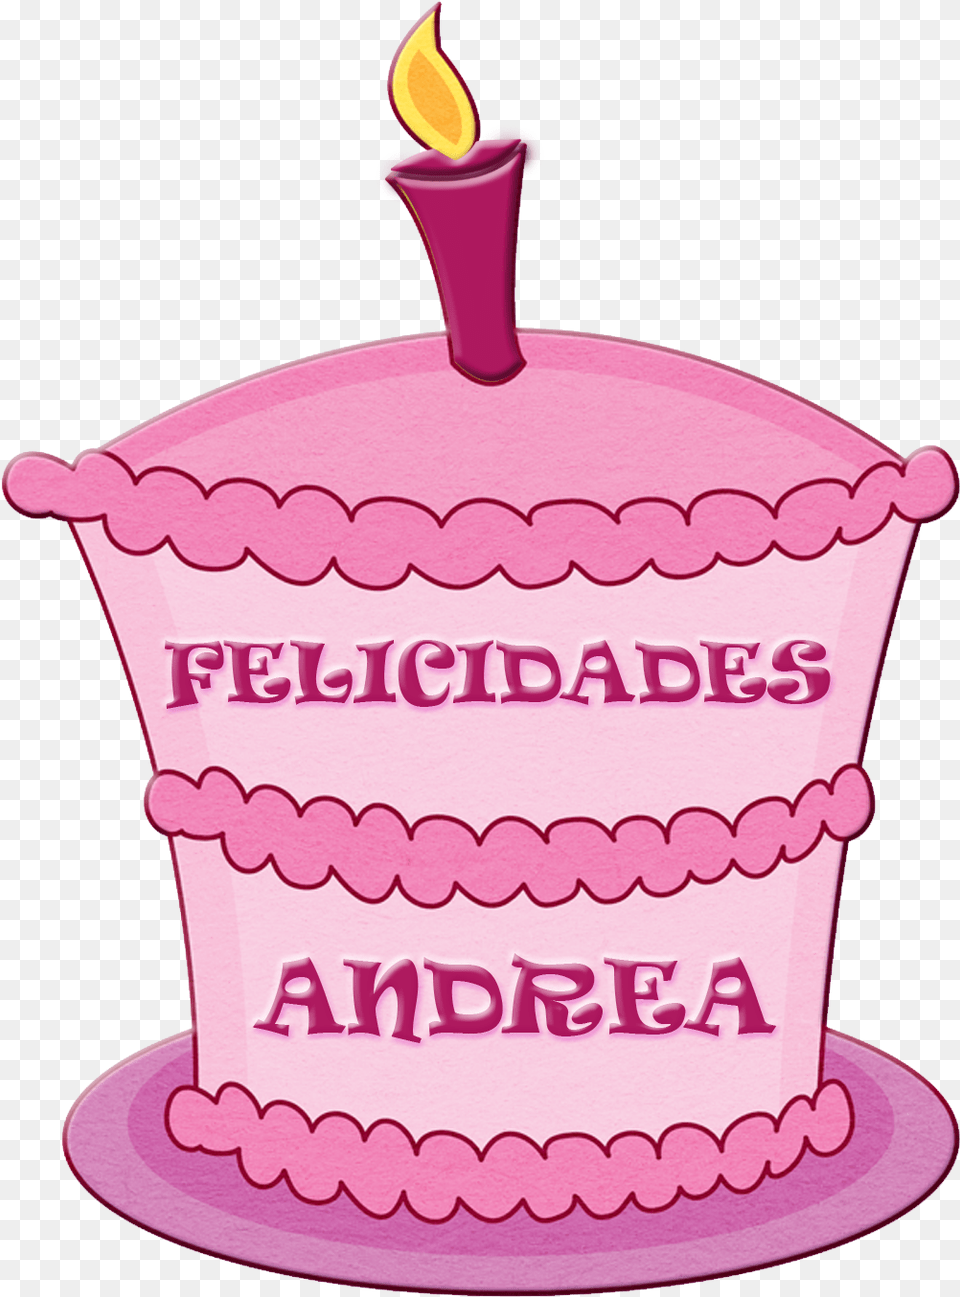 Hoy Ha Sido El Cumple De Andrea 16 Cmo Pasa Andrei Bely By Daniel H Shubin, Birthday Cake, Cake, Cream, Dessert Free Png Download